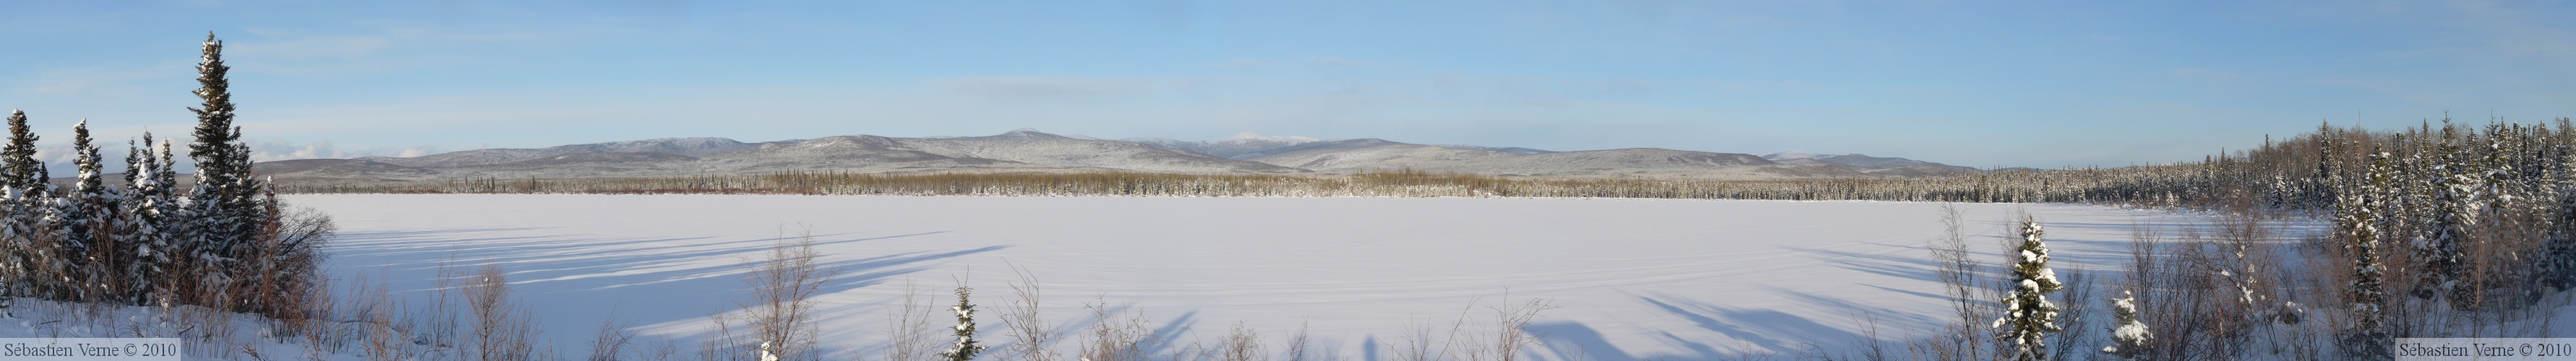 P1190911-Panorama Dempster Winter 09.jpg